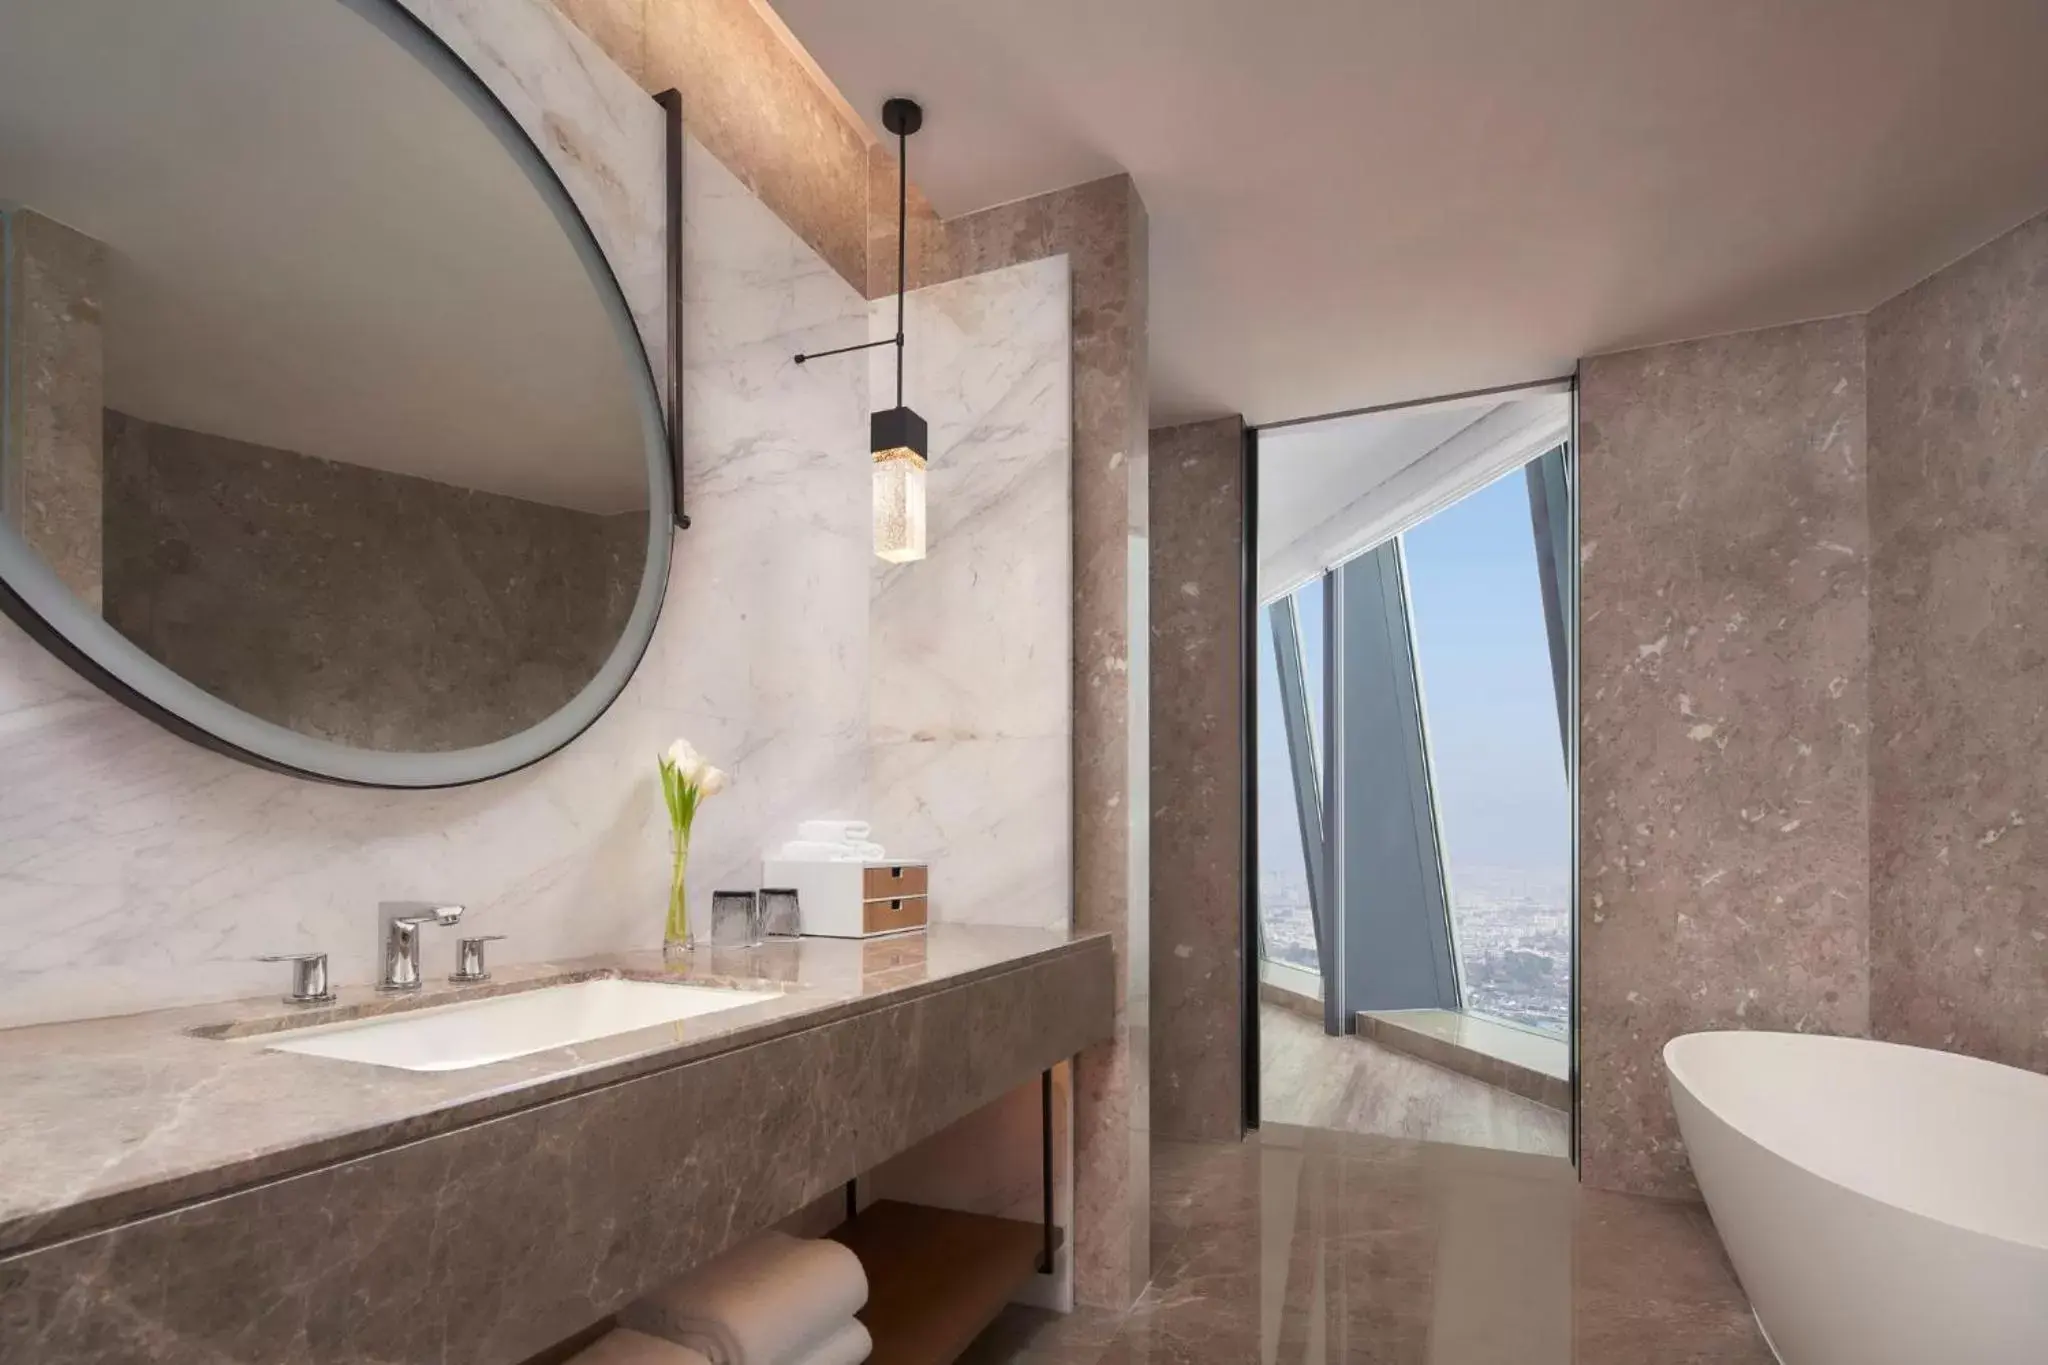 Photo of the whole room, Bathroom in Jinhua Marriott Hotel